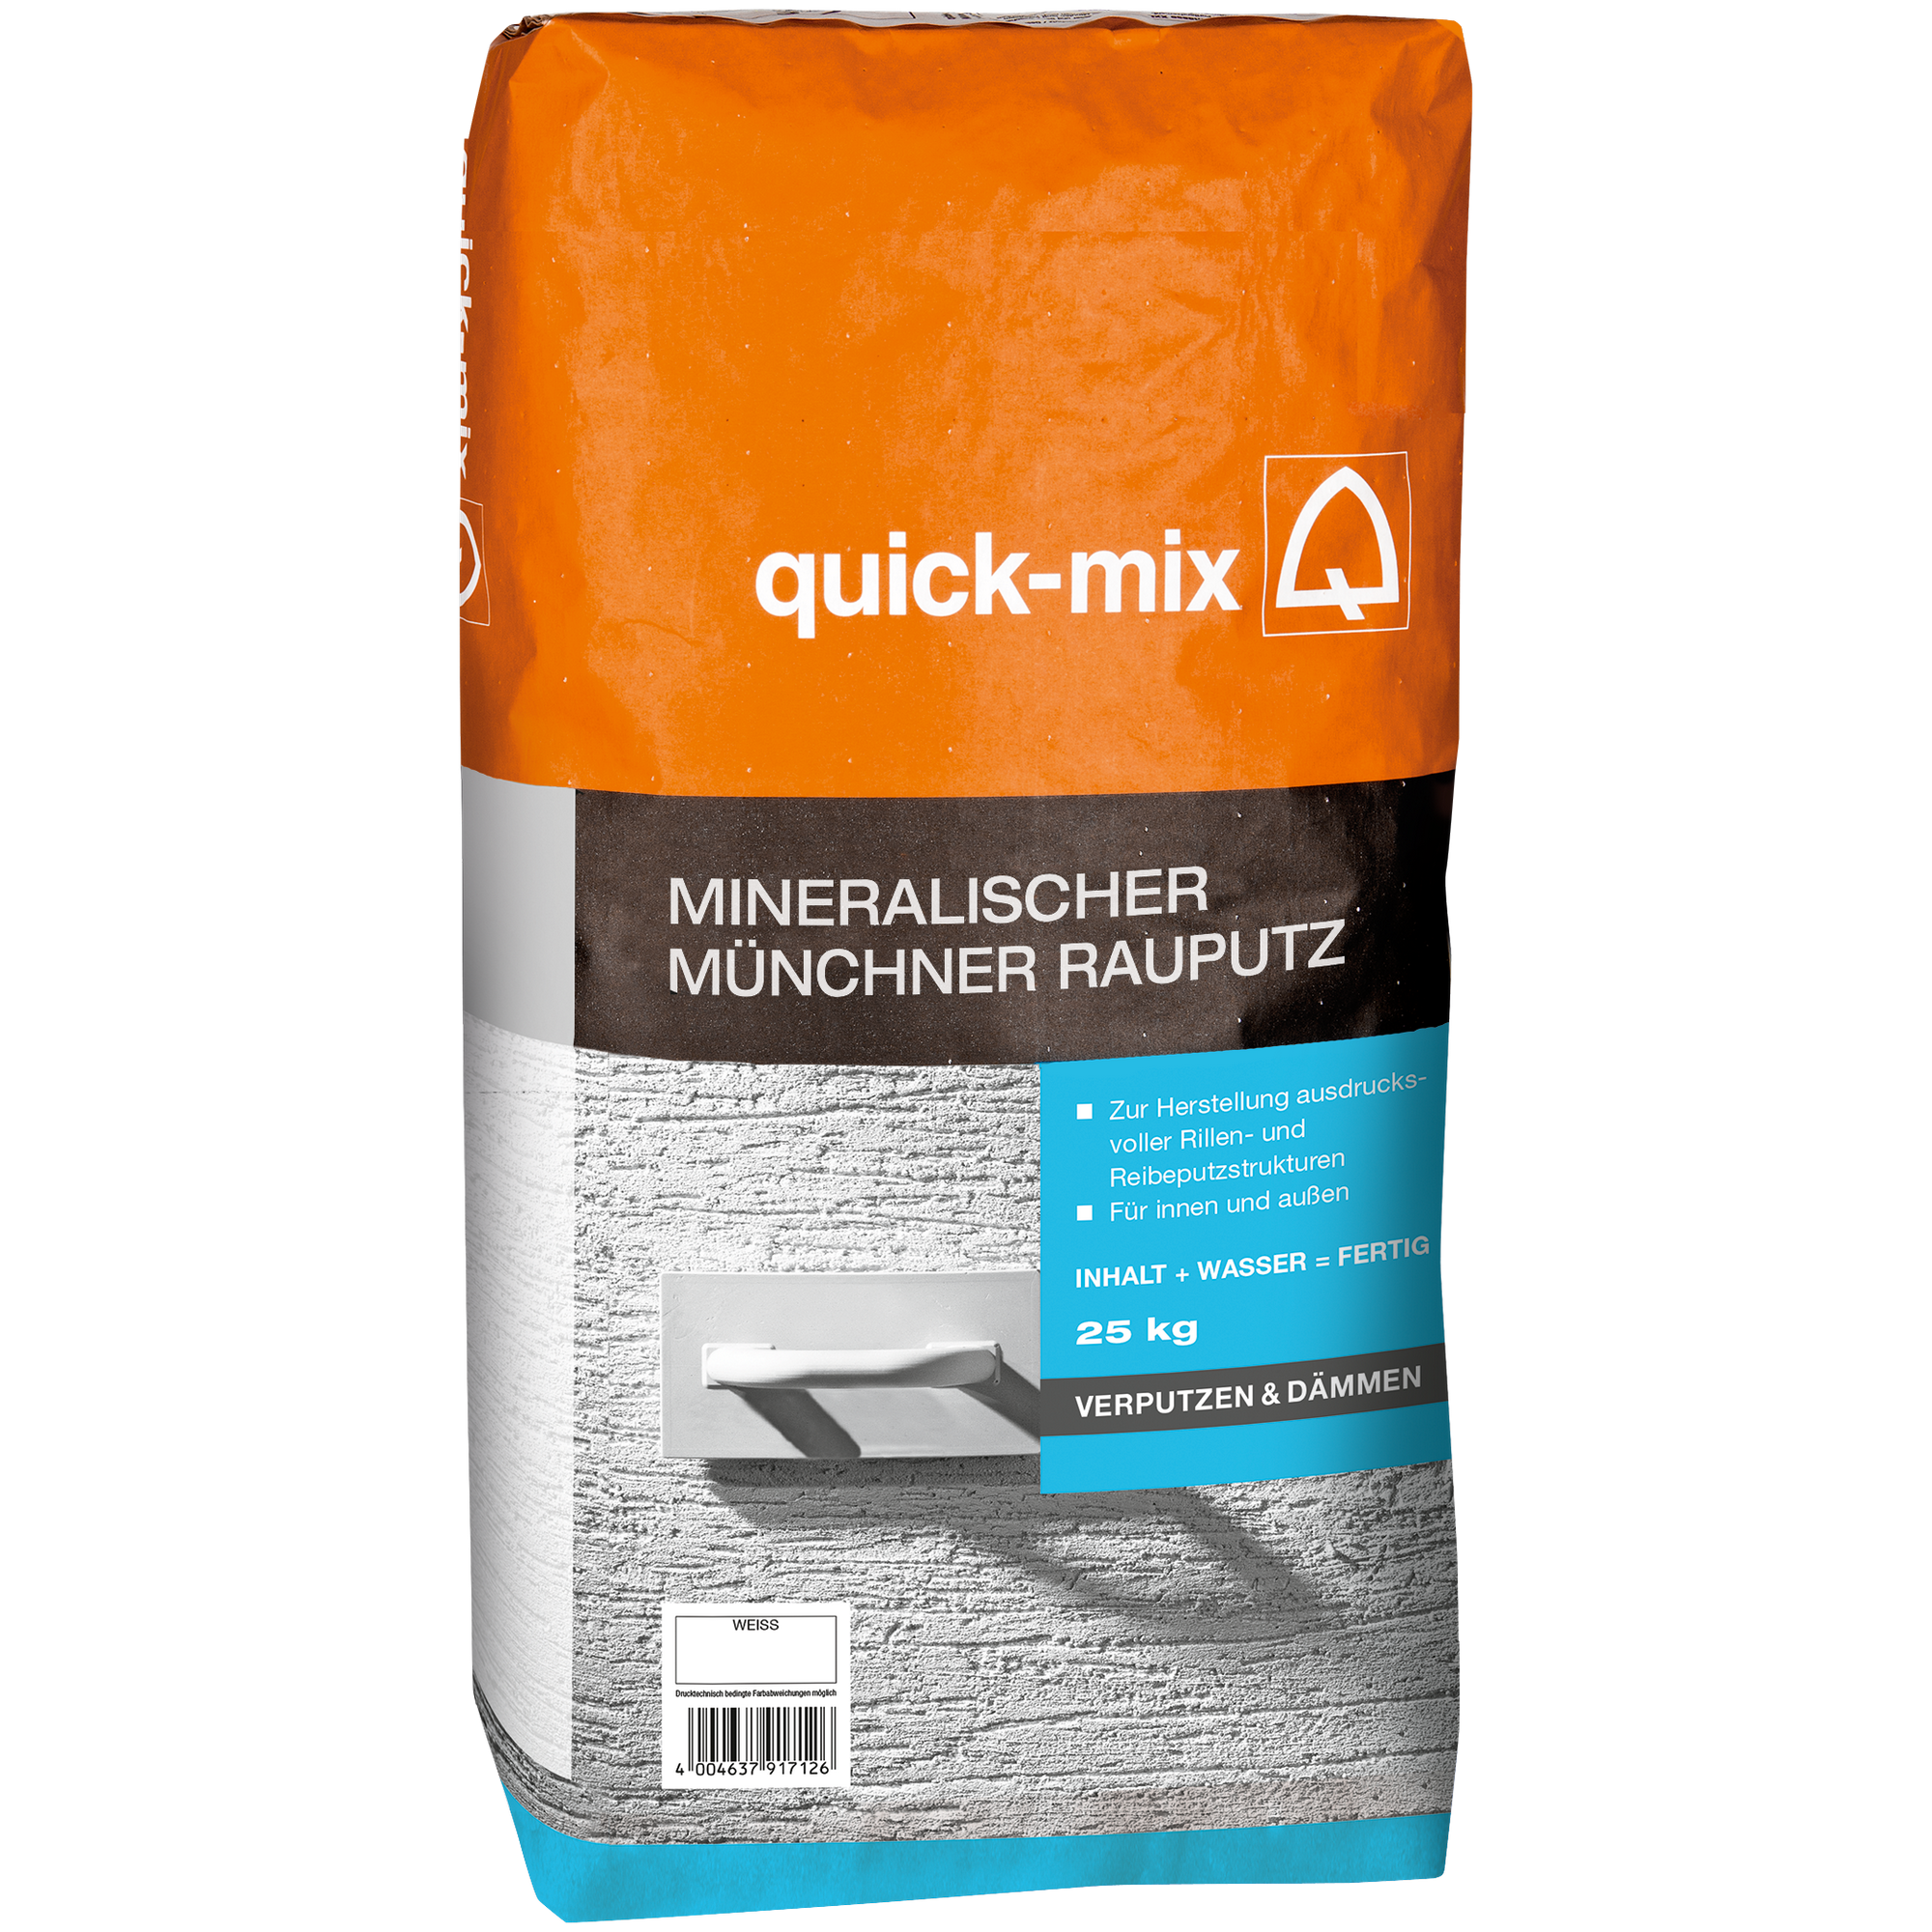 Münchner Rauhputz 25 kg + product picture